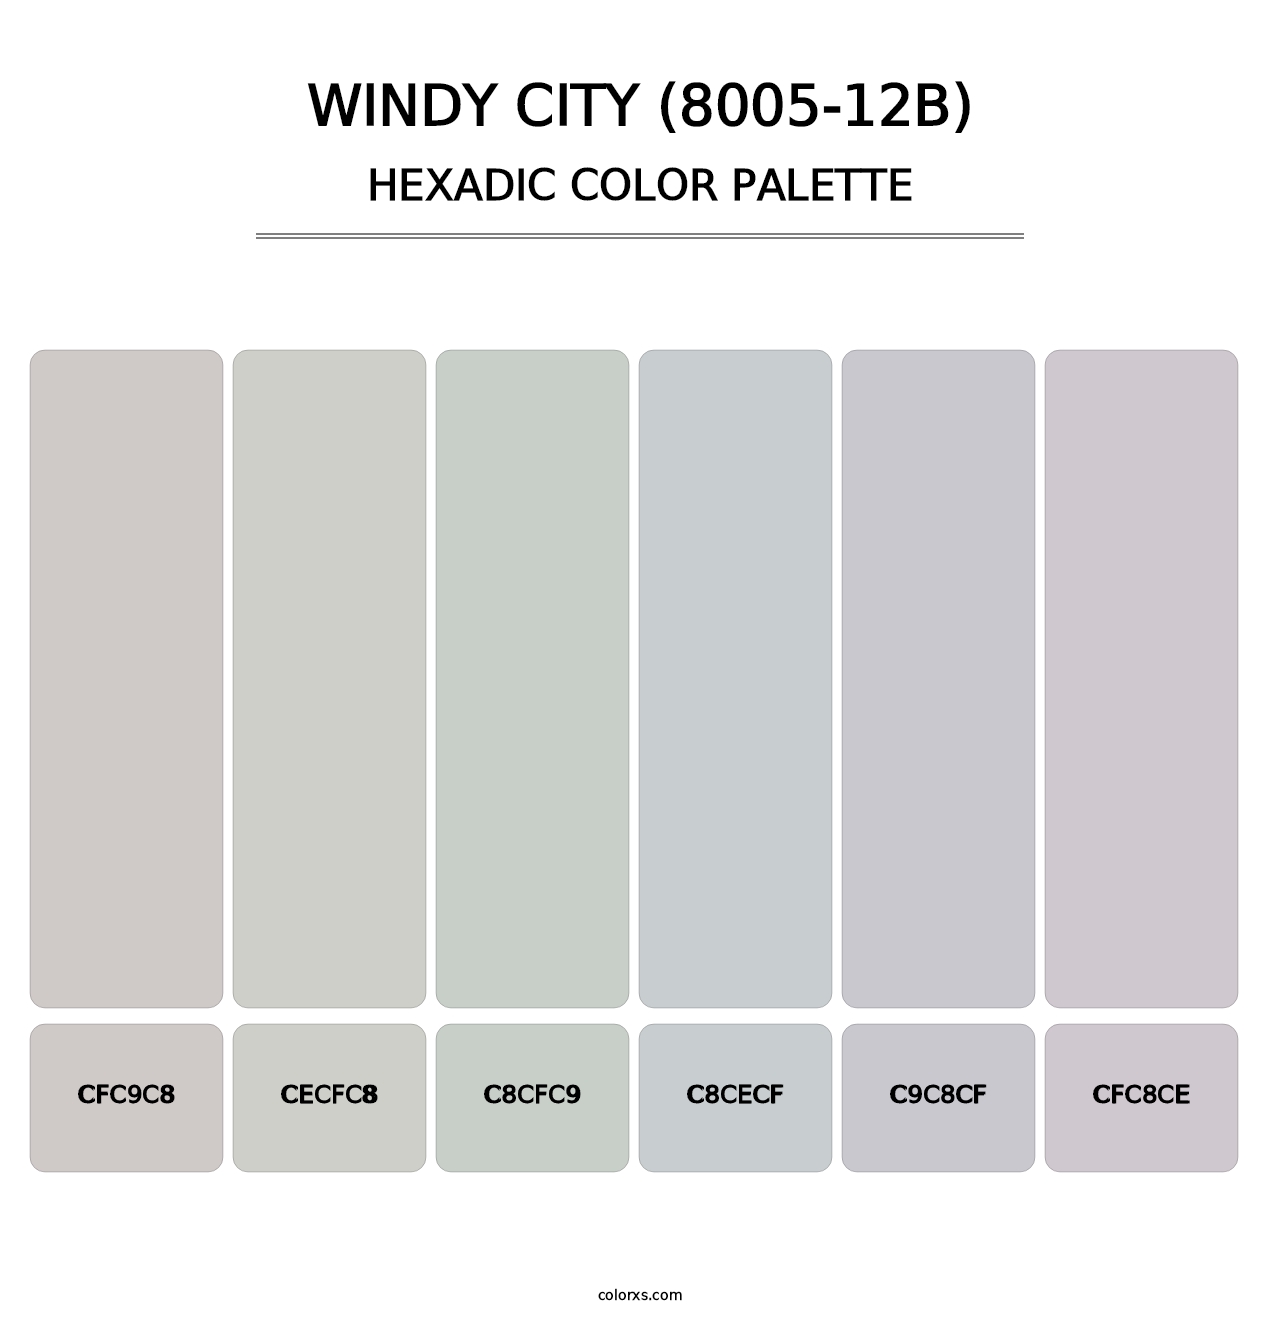 Windy City (8005-12B) - Hexadic Color Palette